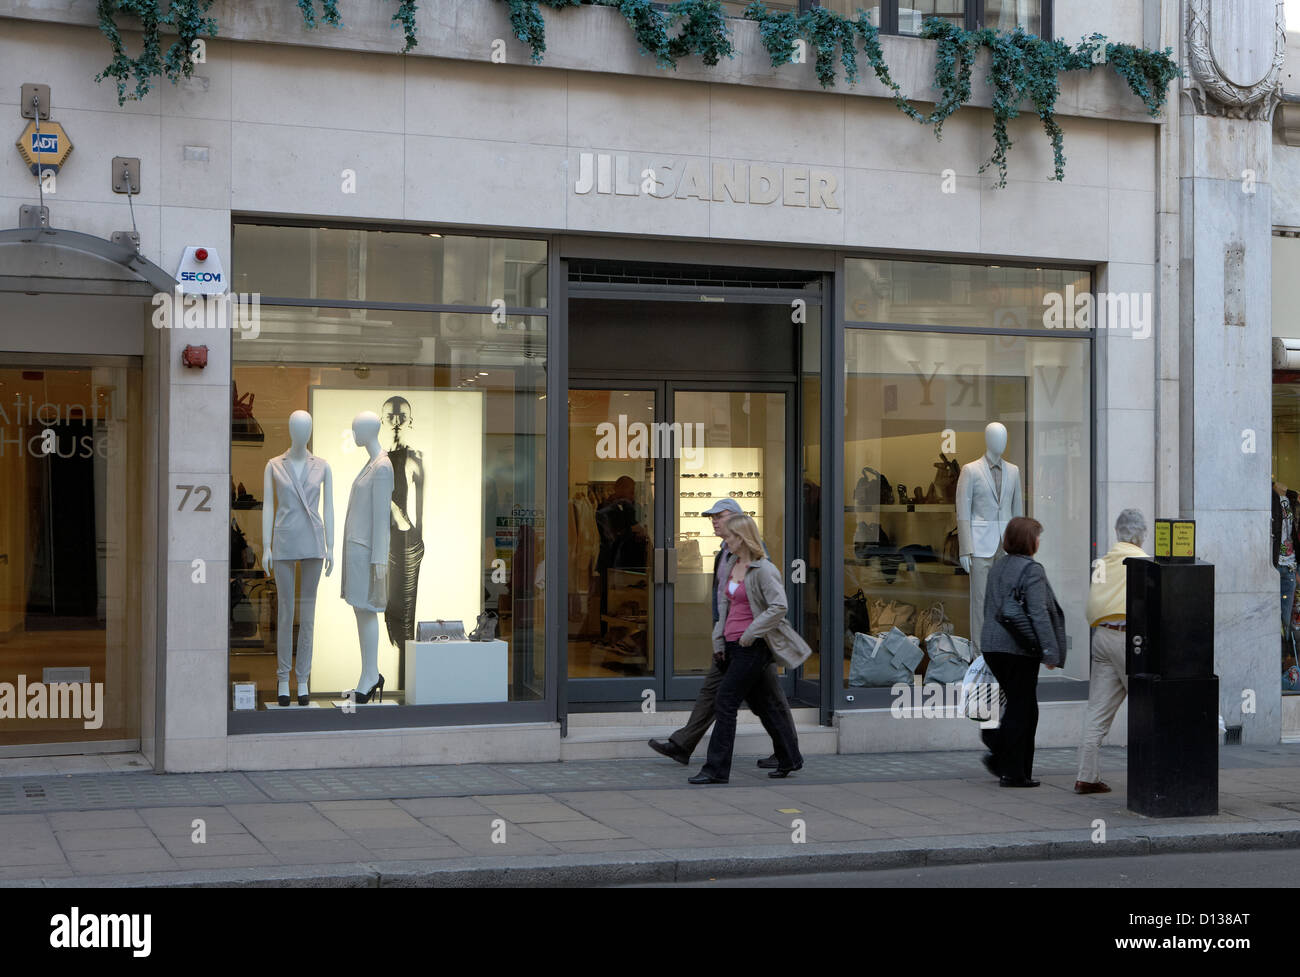 London, United Kingdom. a Nobel boutique brand Jil Sander Stock Photo -  Alamy